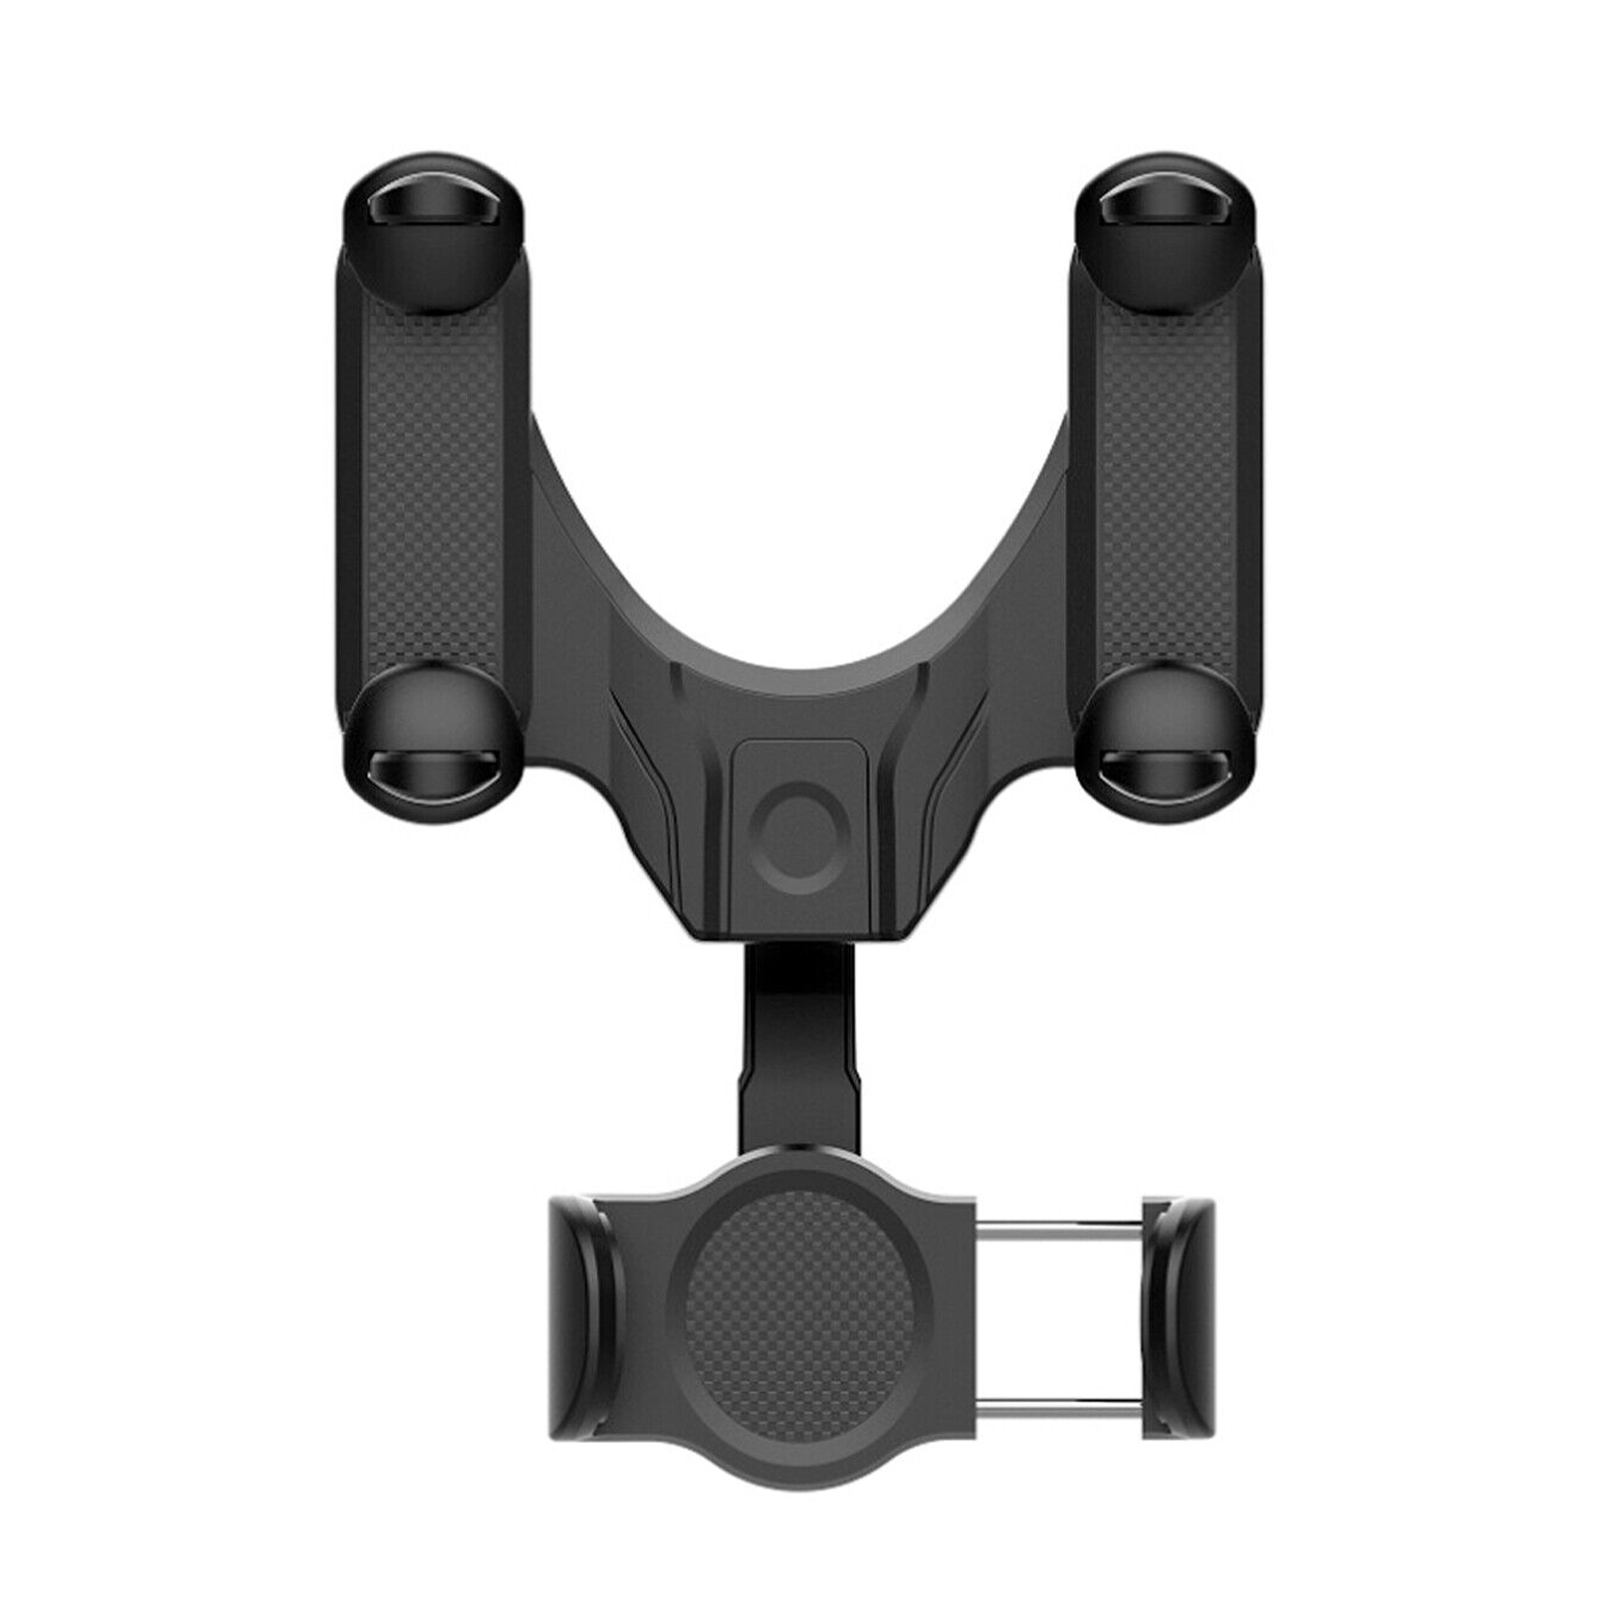 Car Phone Holder Cradle Rearview Mirror Mount Stand 360-degree Rotation Universal Gps Navigation Bracket